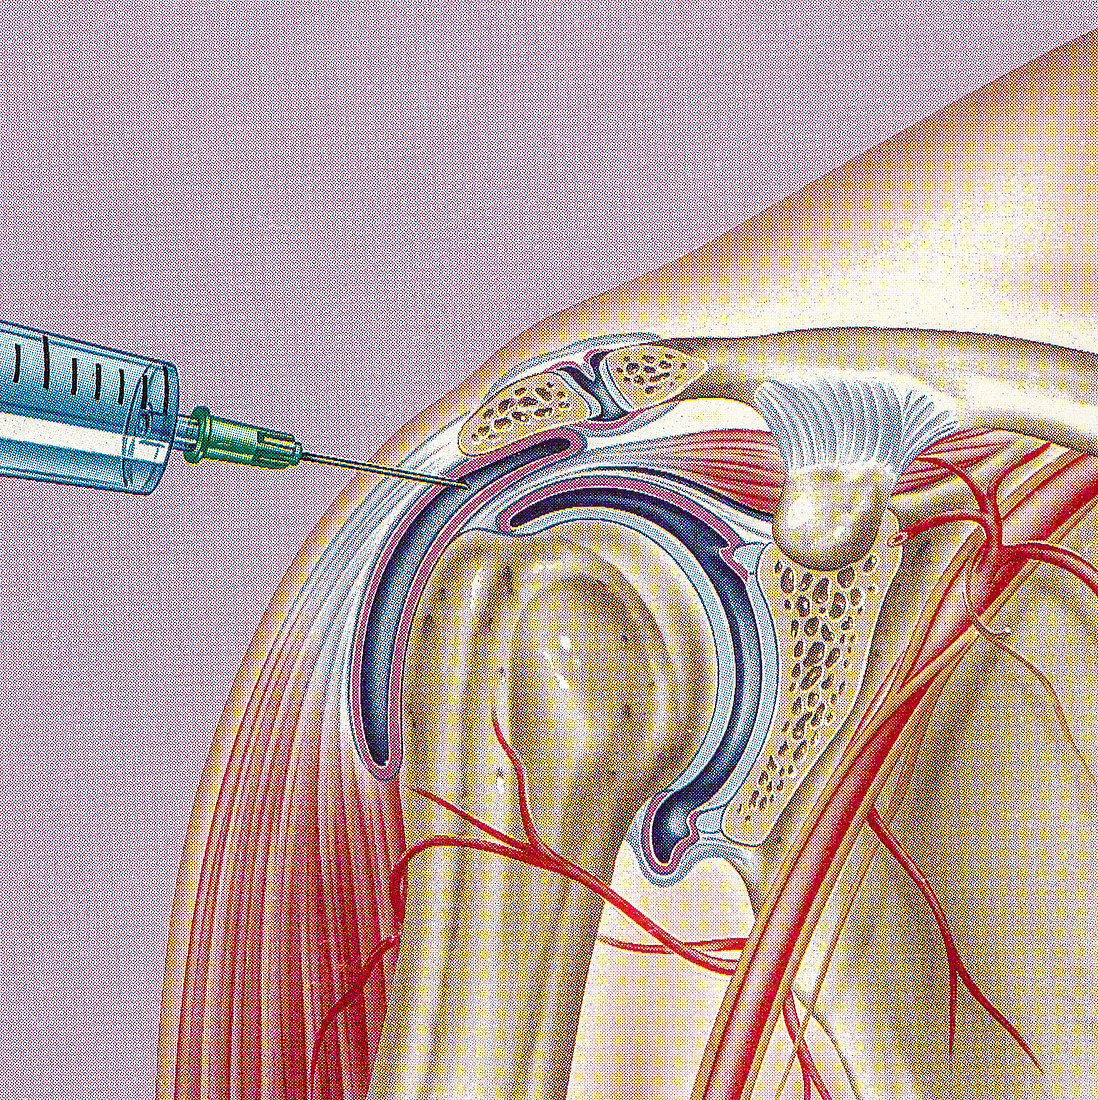 Steroid treatment of shoulder joint, illustration